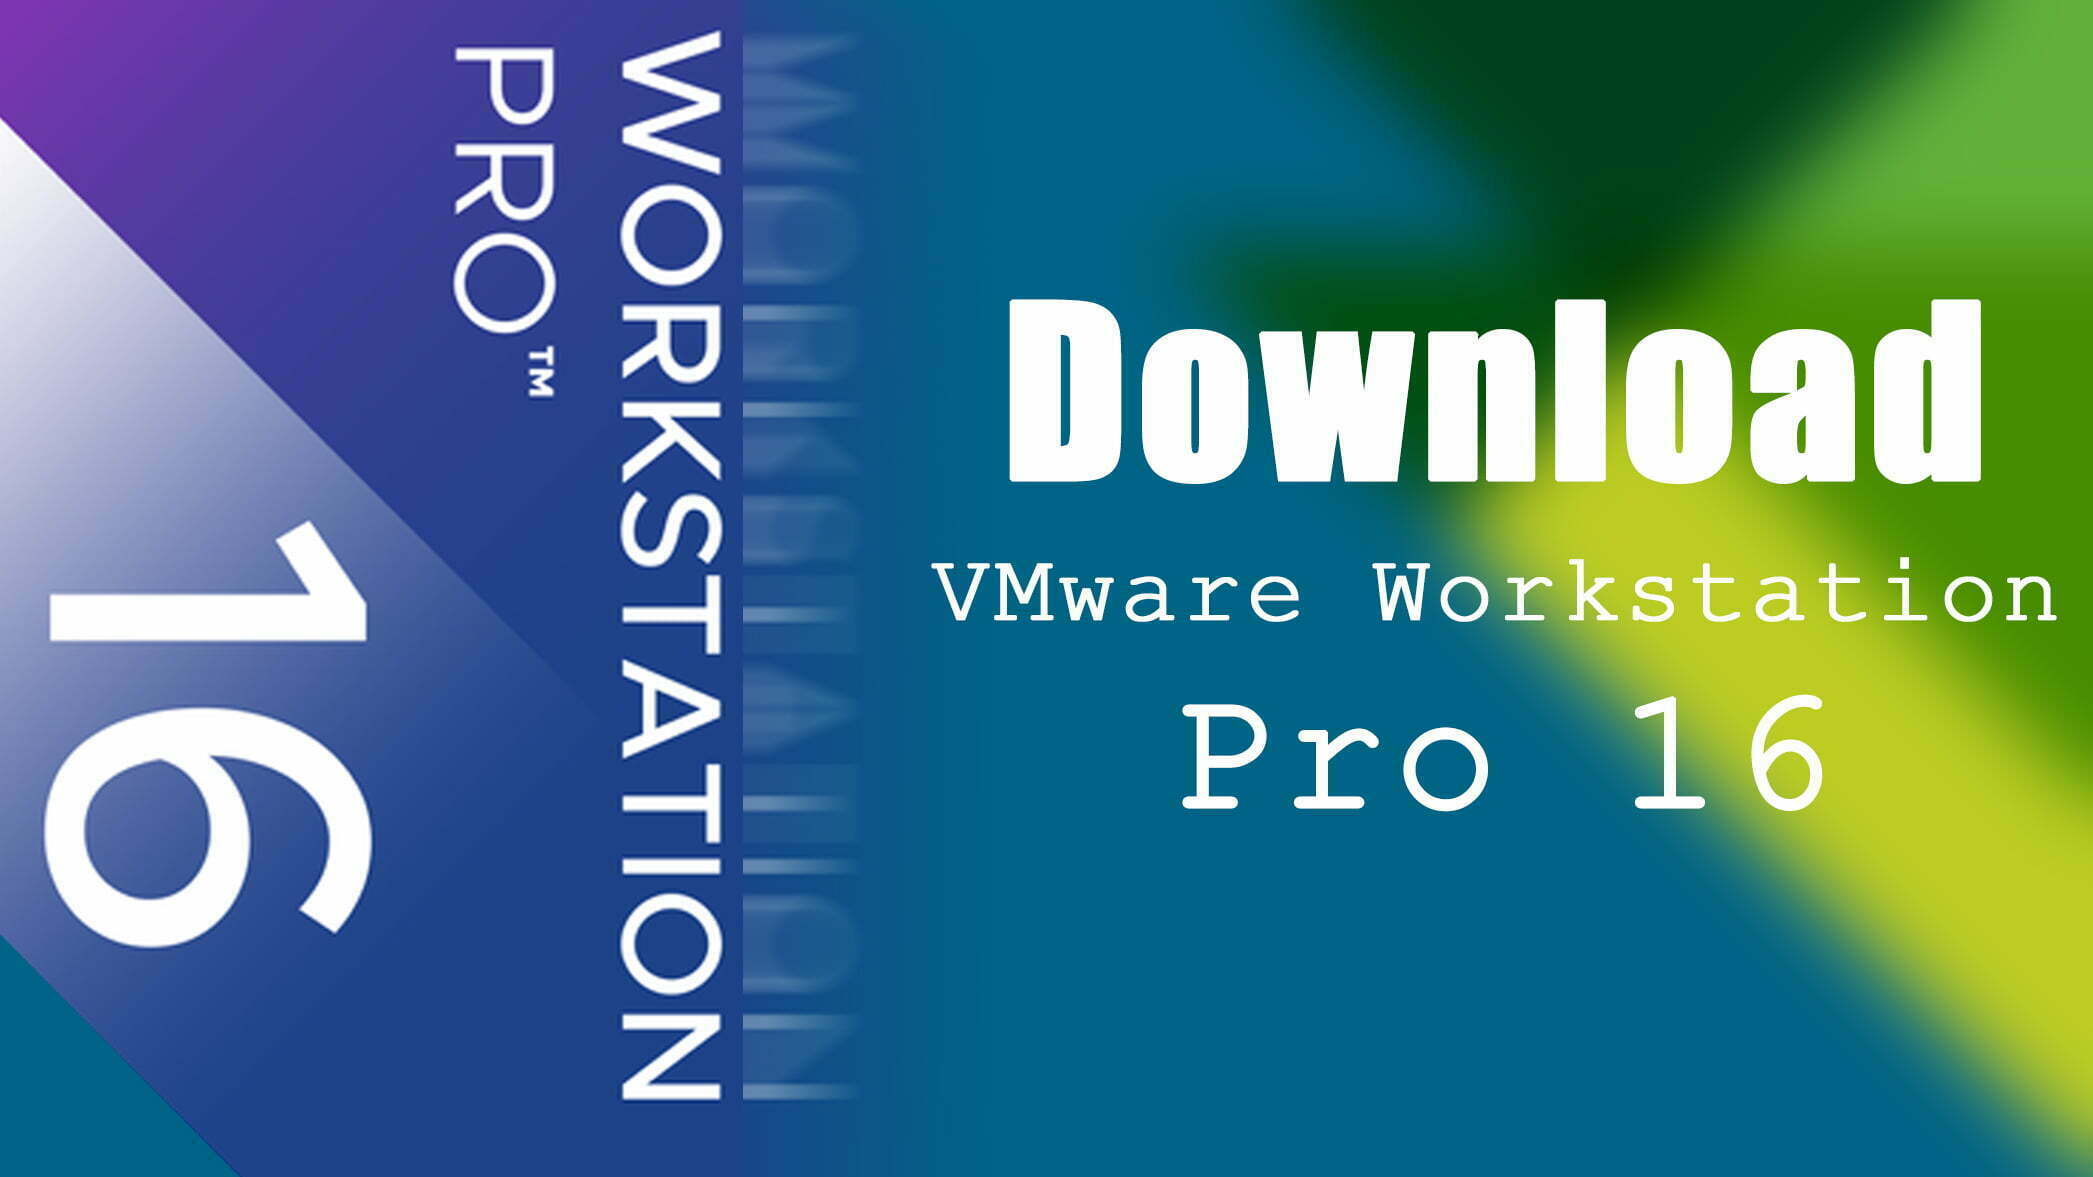 vmware workstation free download old version